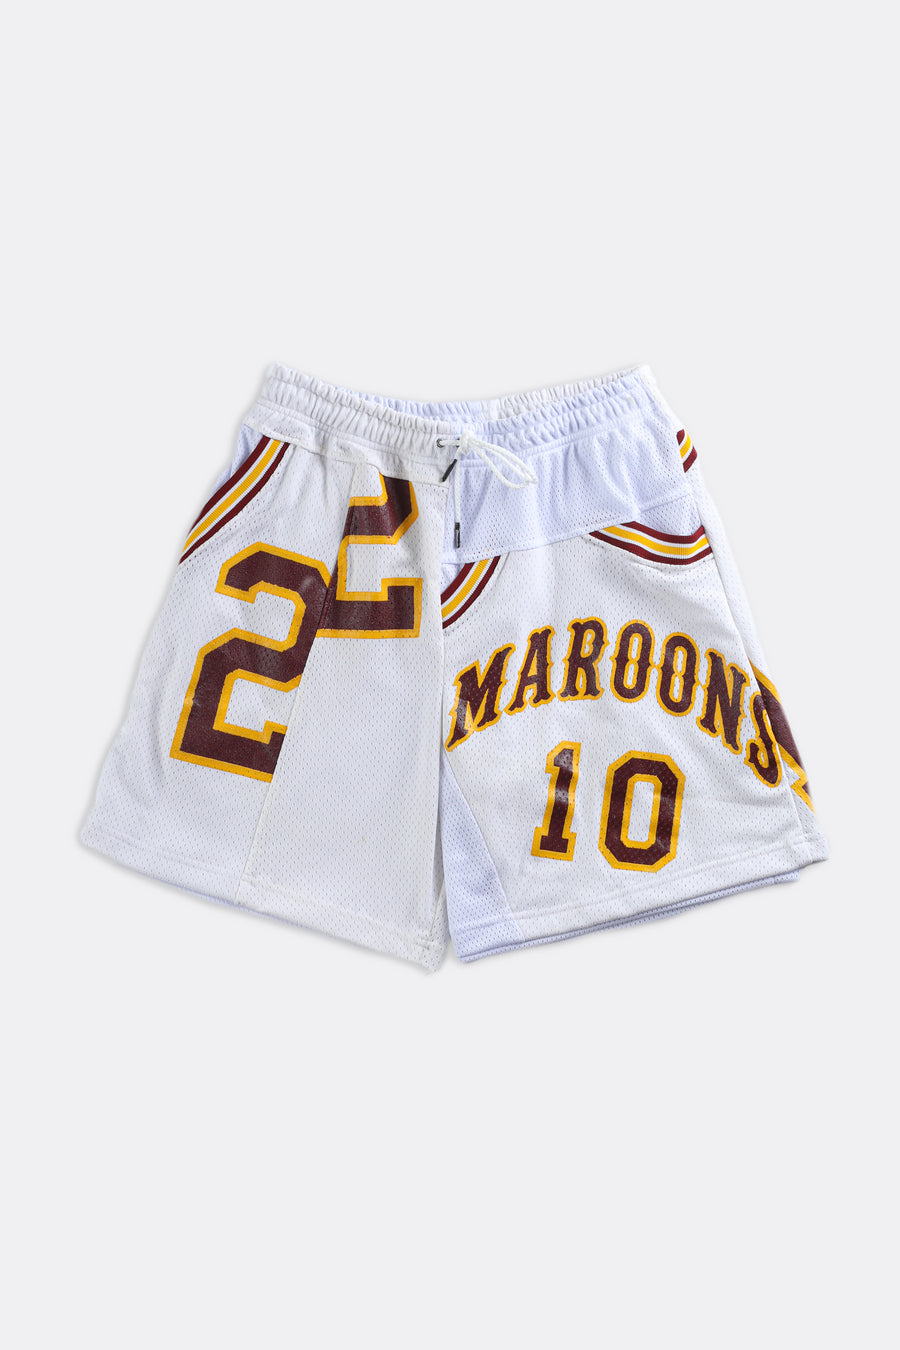 Unisex Rework Maroon NFL Jersey Shorts - Women-M, Men-S